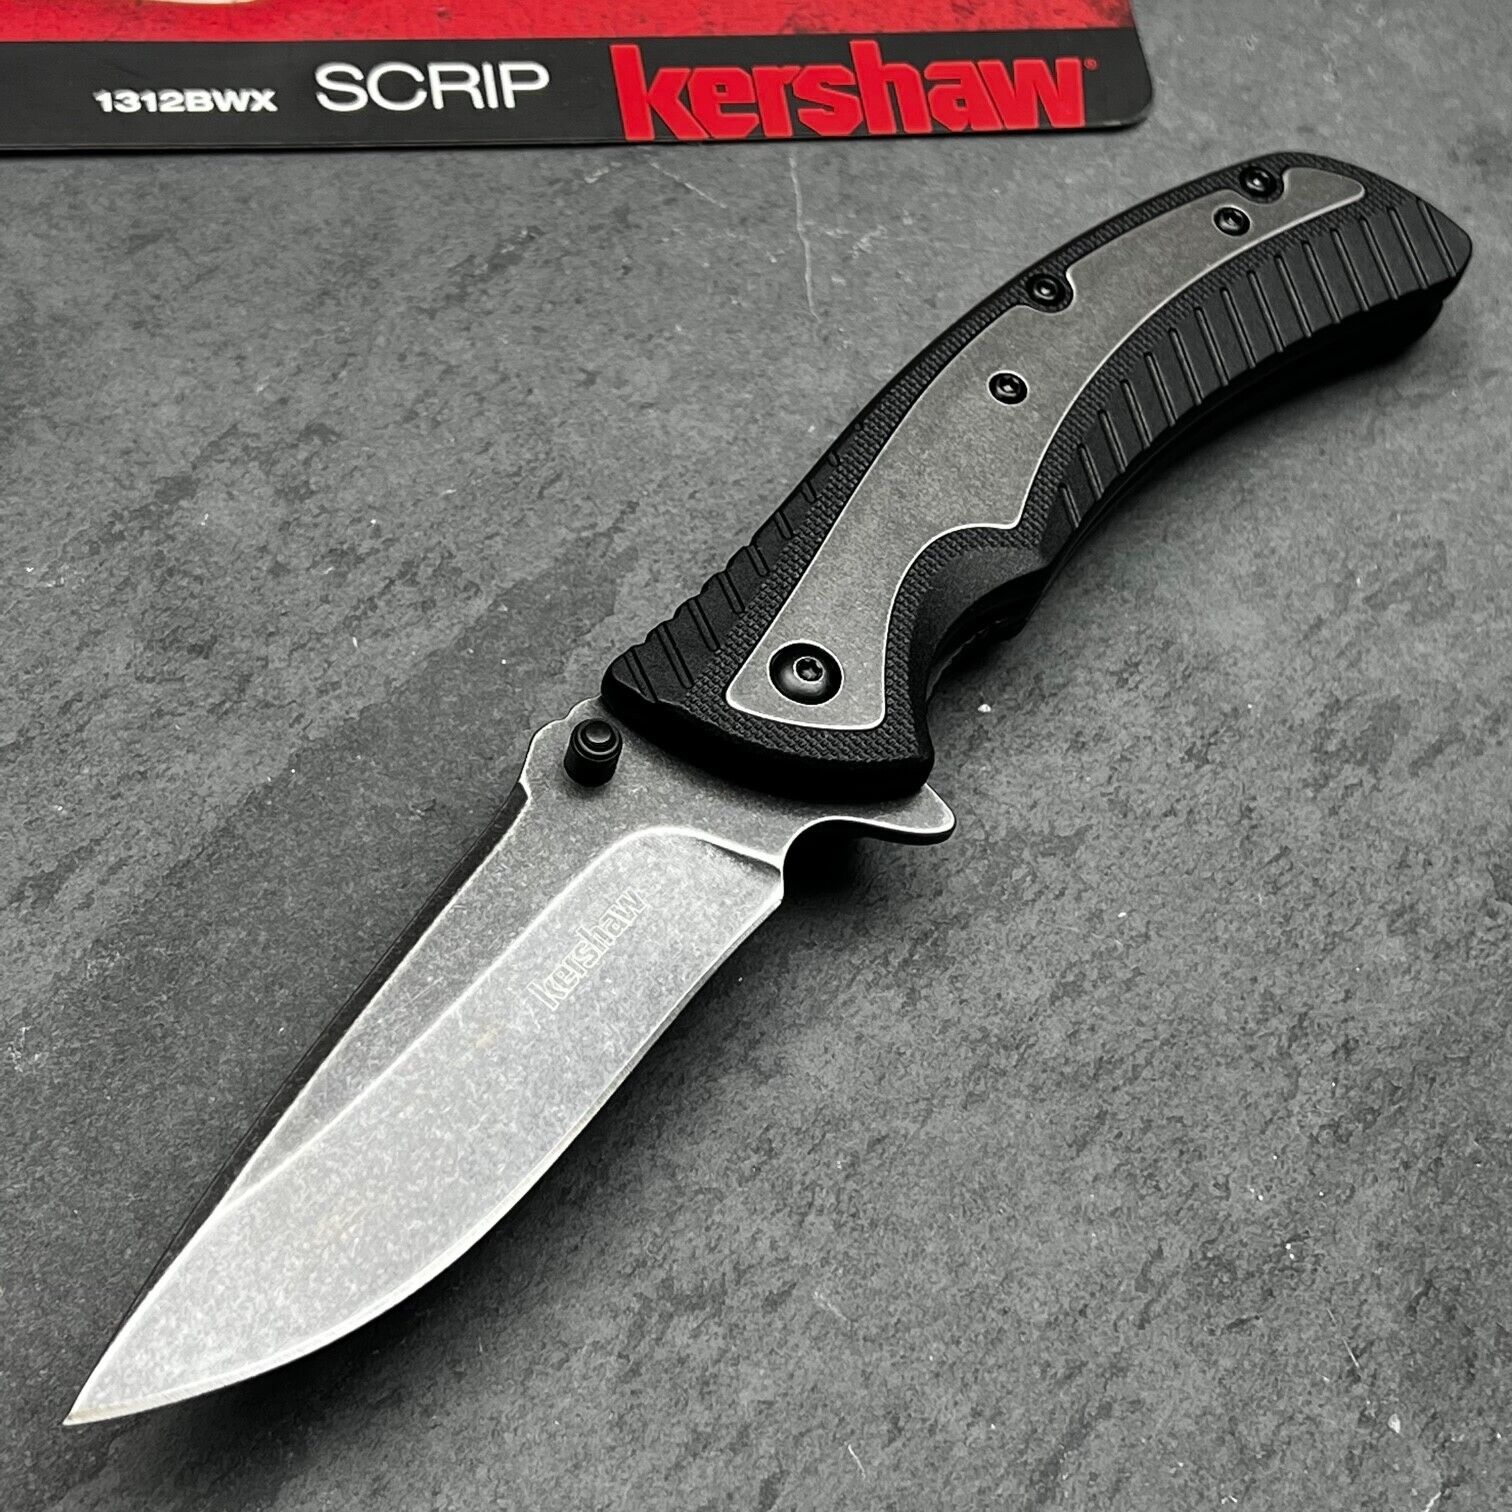 KERSHAW Black Scrip Drop Point Spring Assisted Opening EDC Folding Pocket Knife